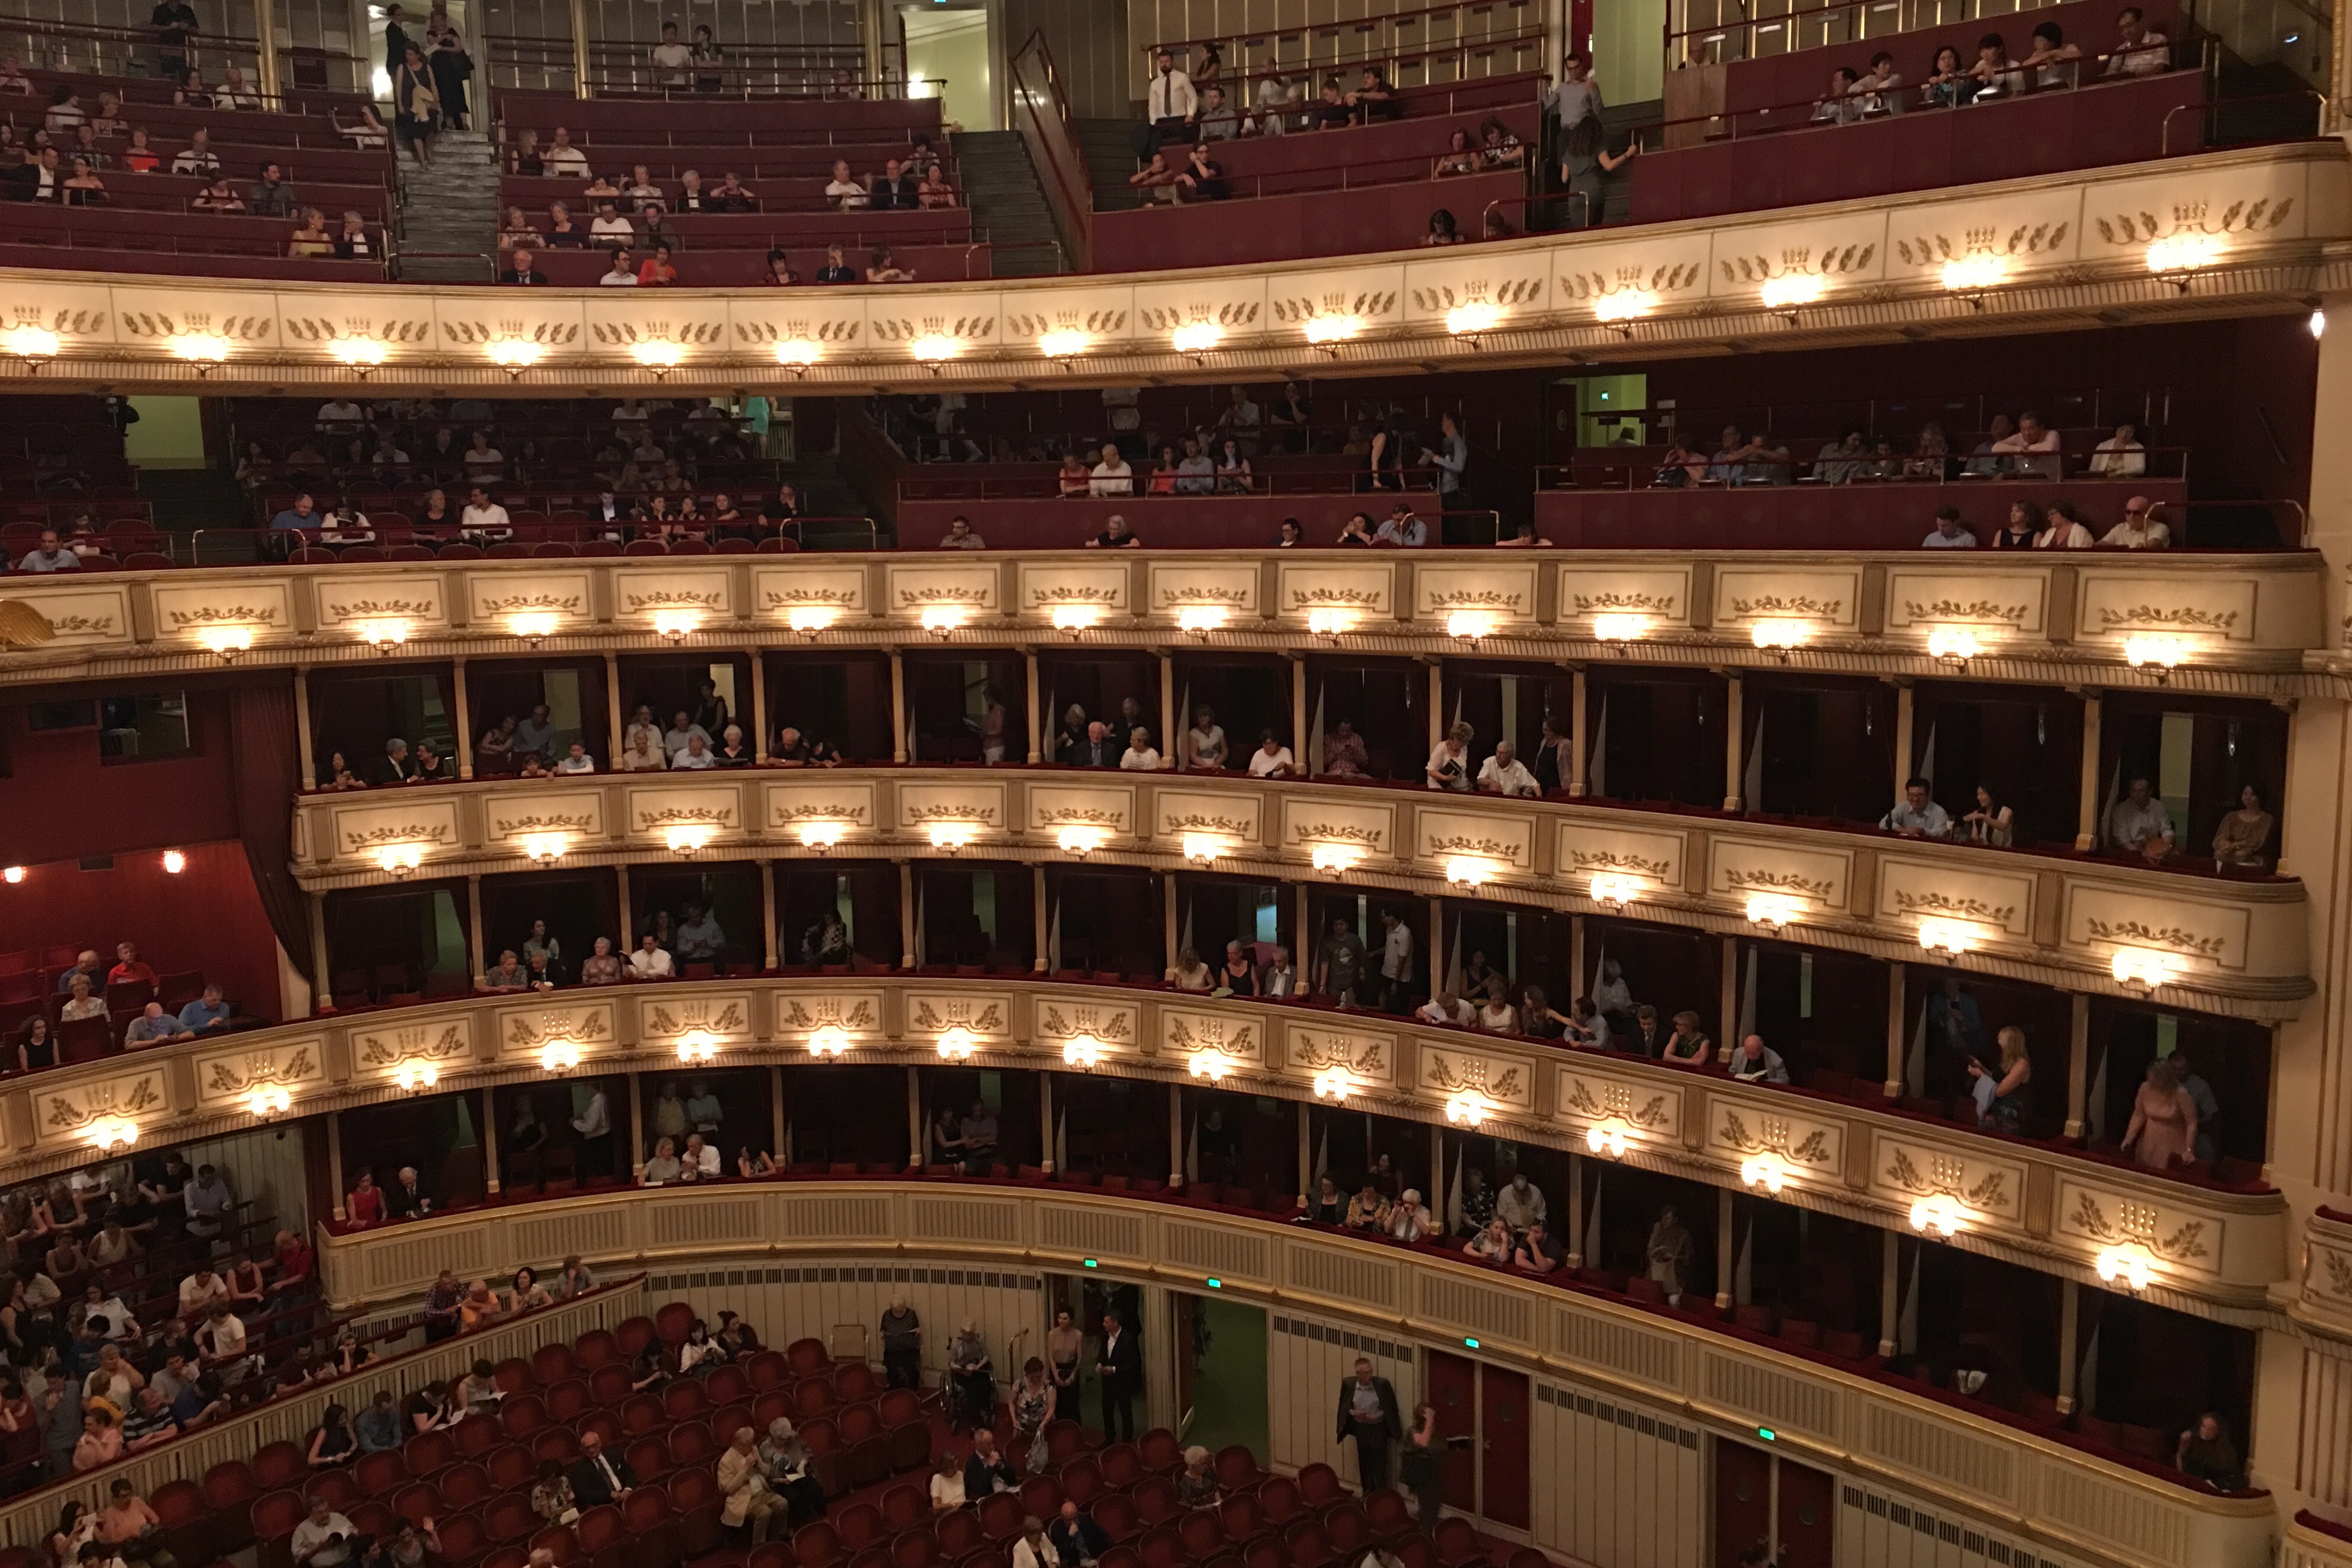 Vienna State Opera Seating Chart